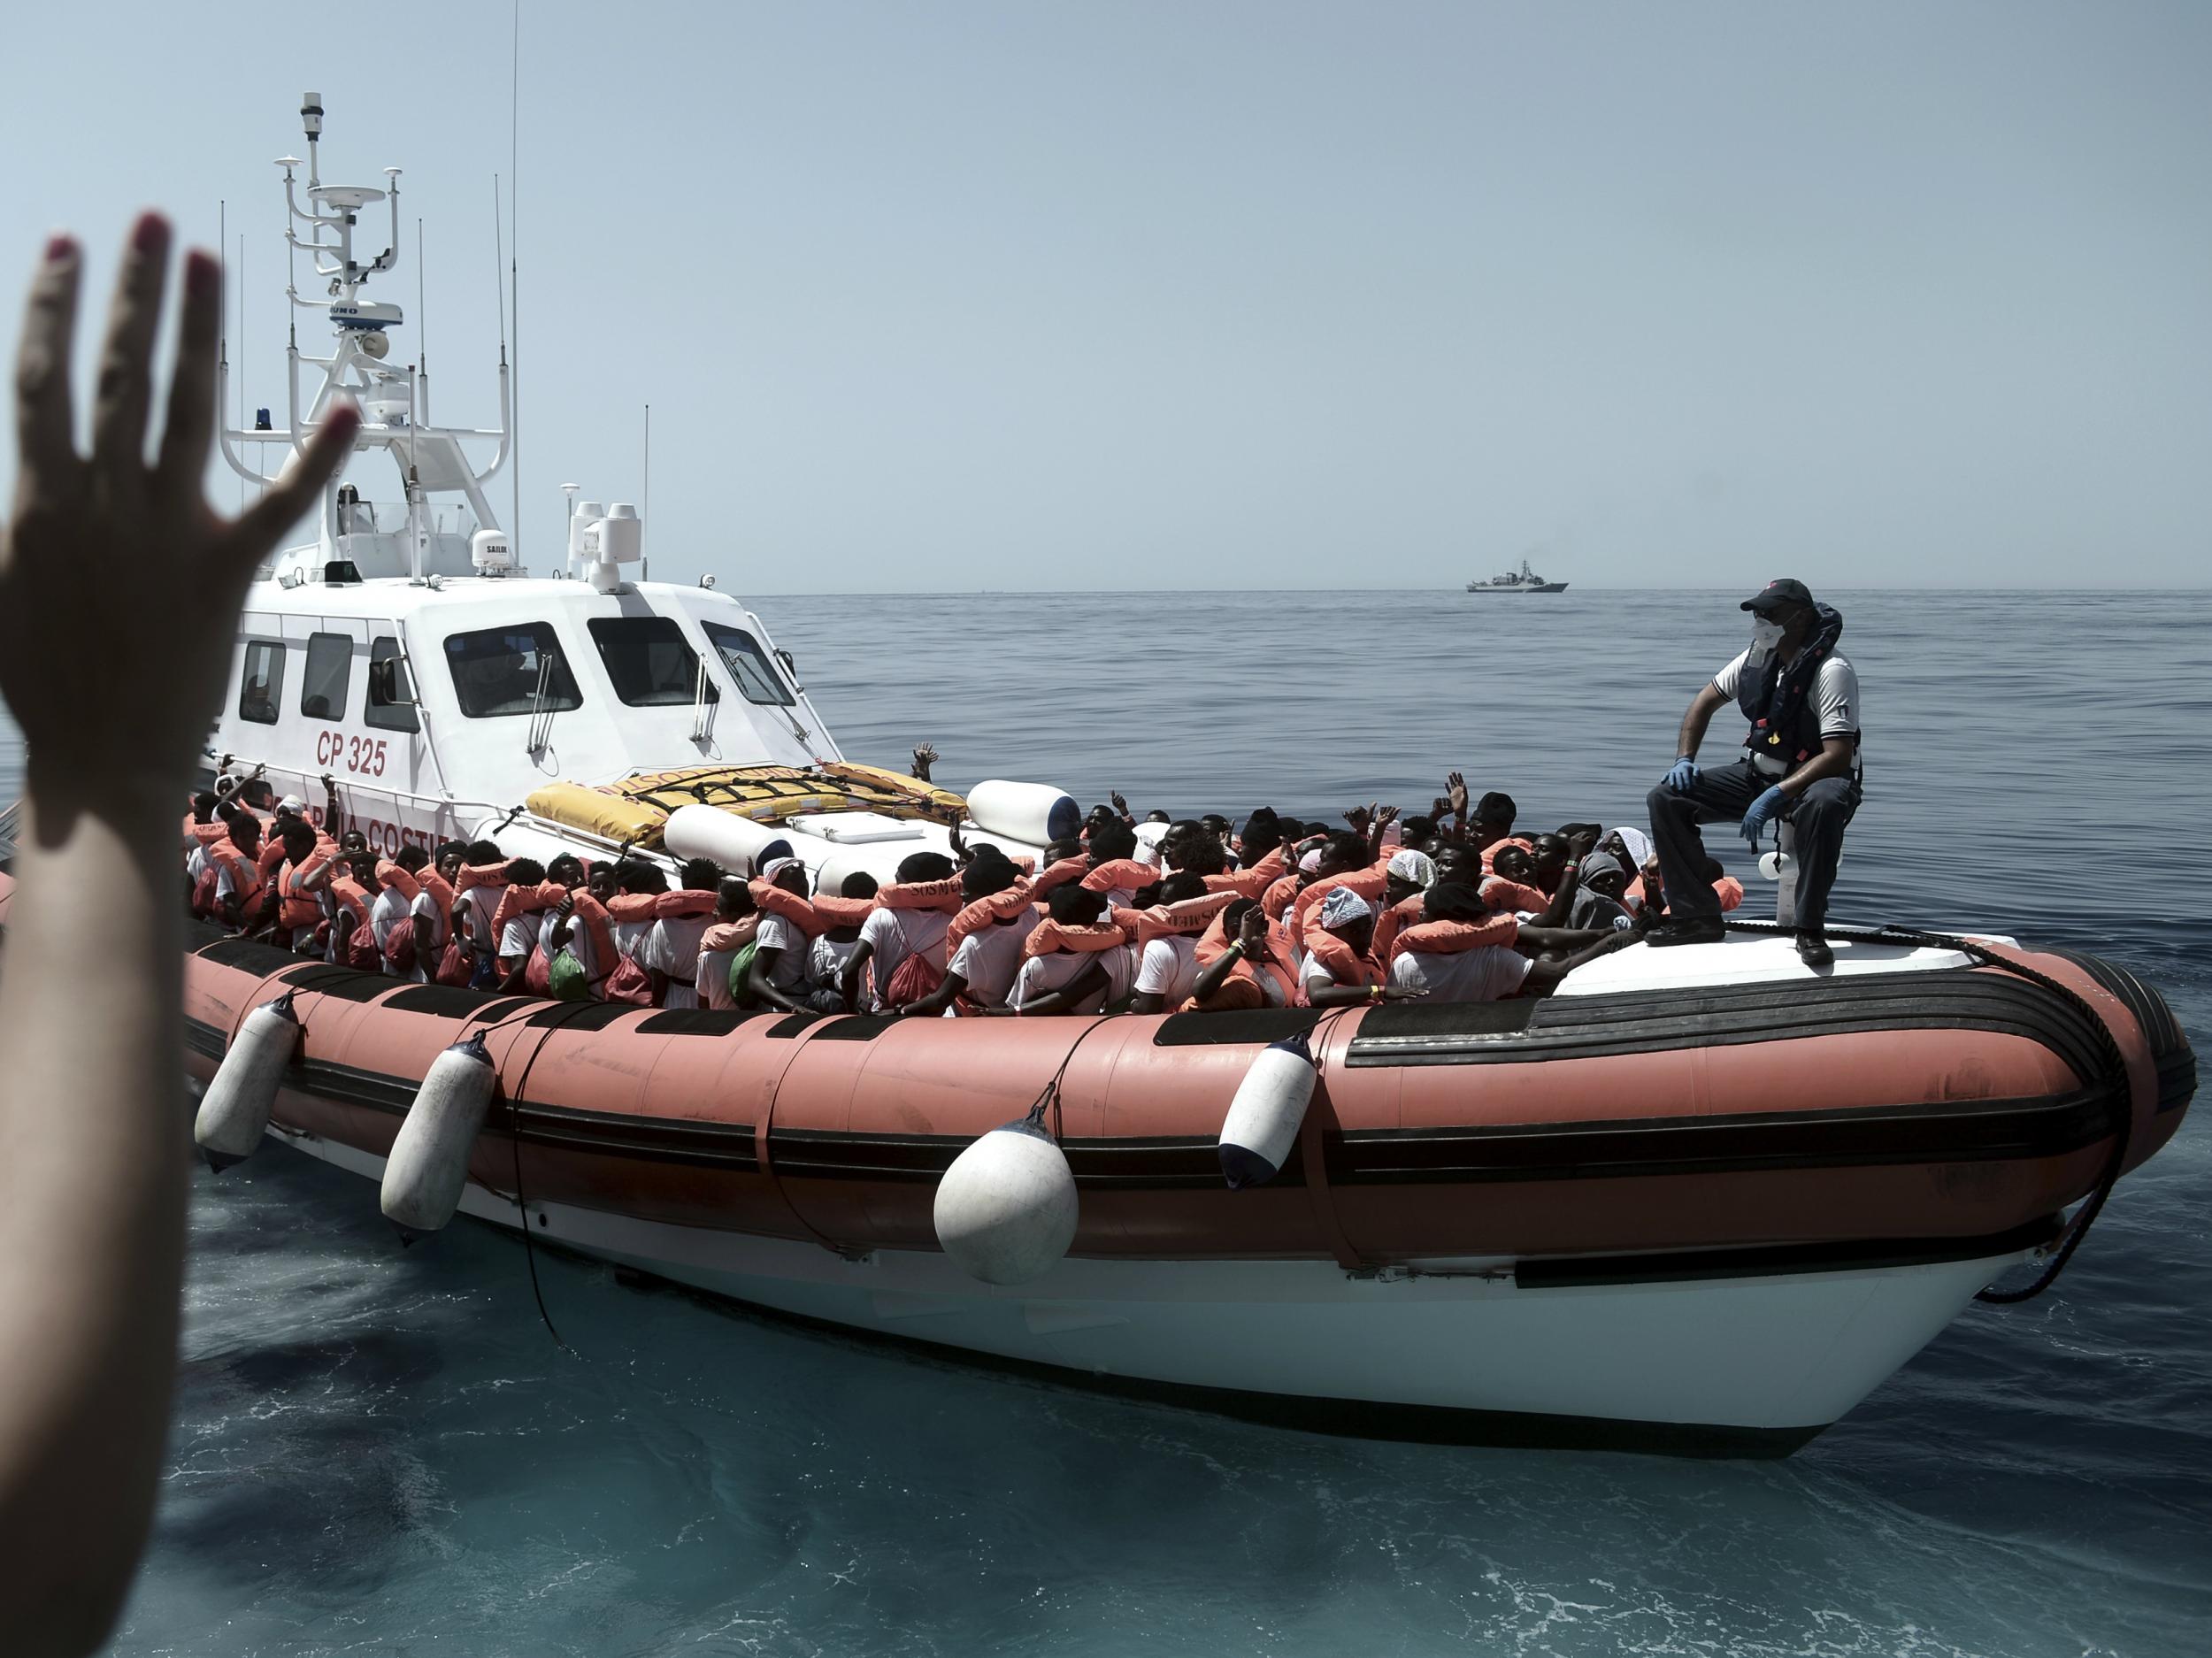 Stranded migrants were transferred from the Aquarius to Italian ships (AP/SOS Mediterranee)